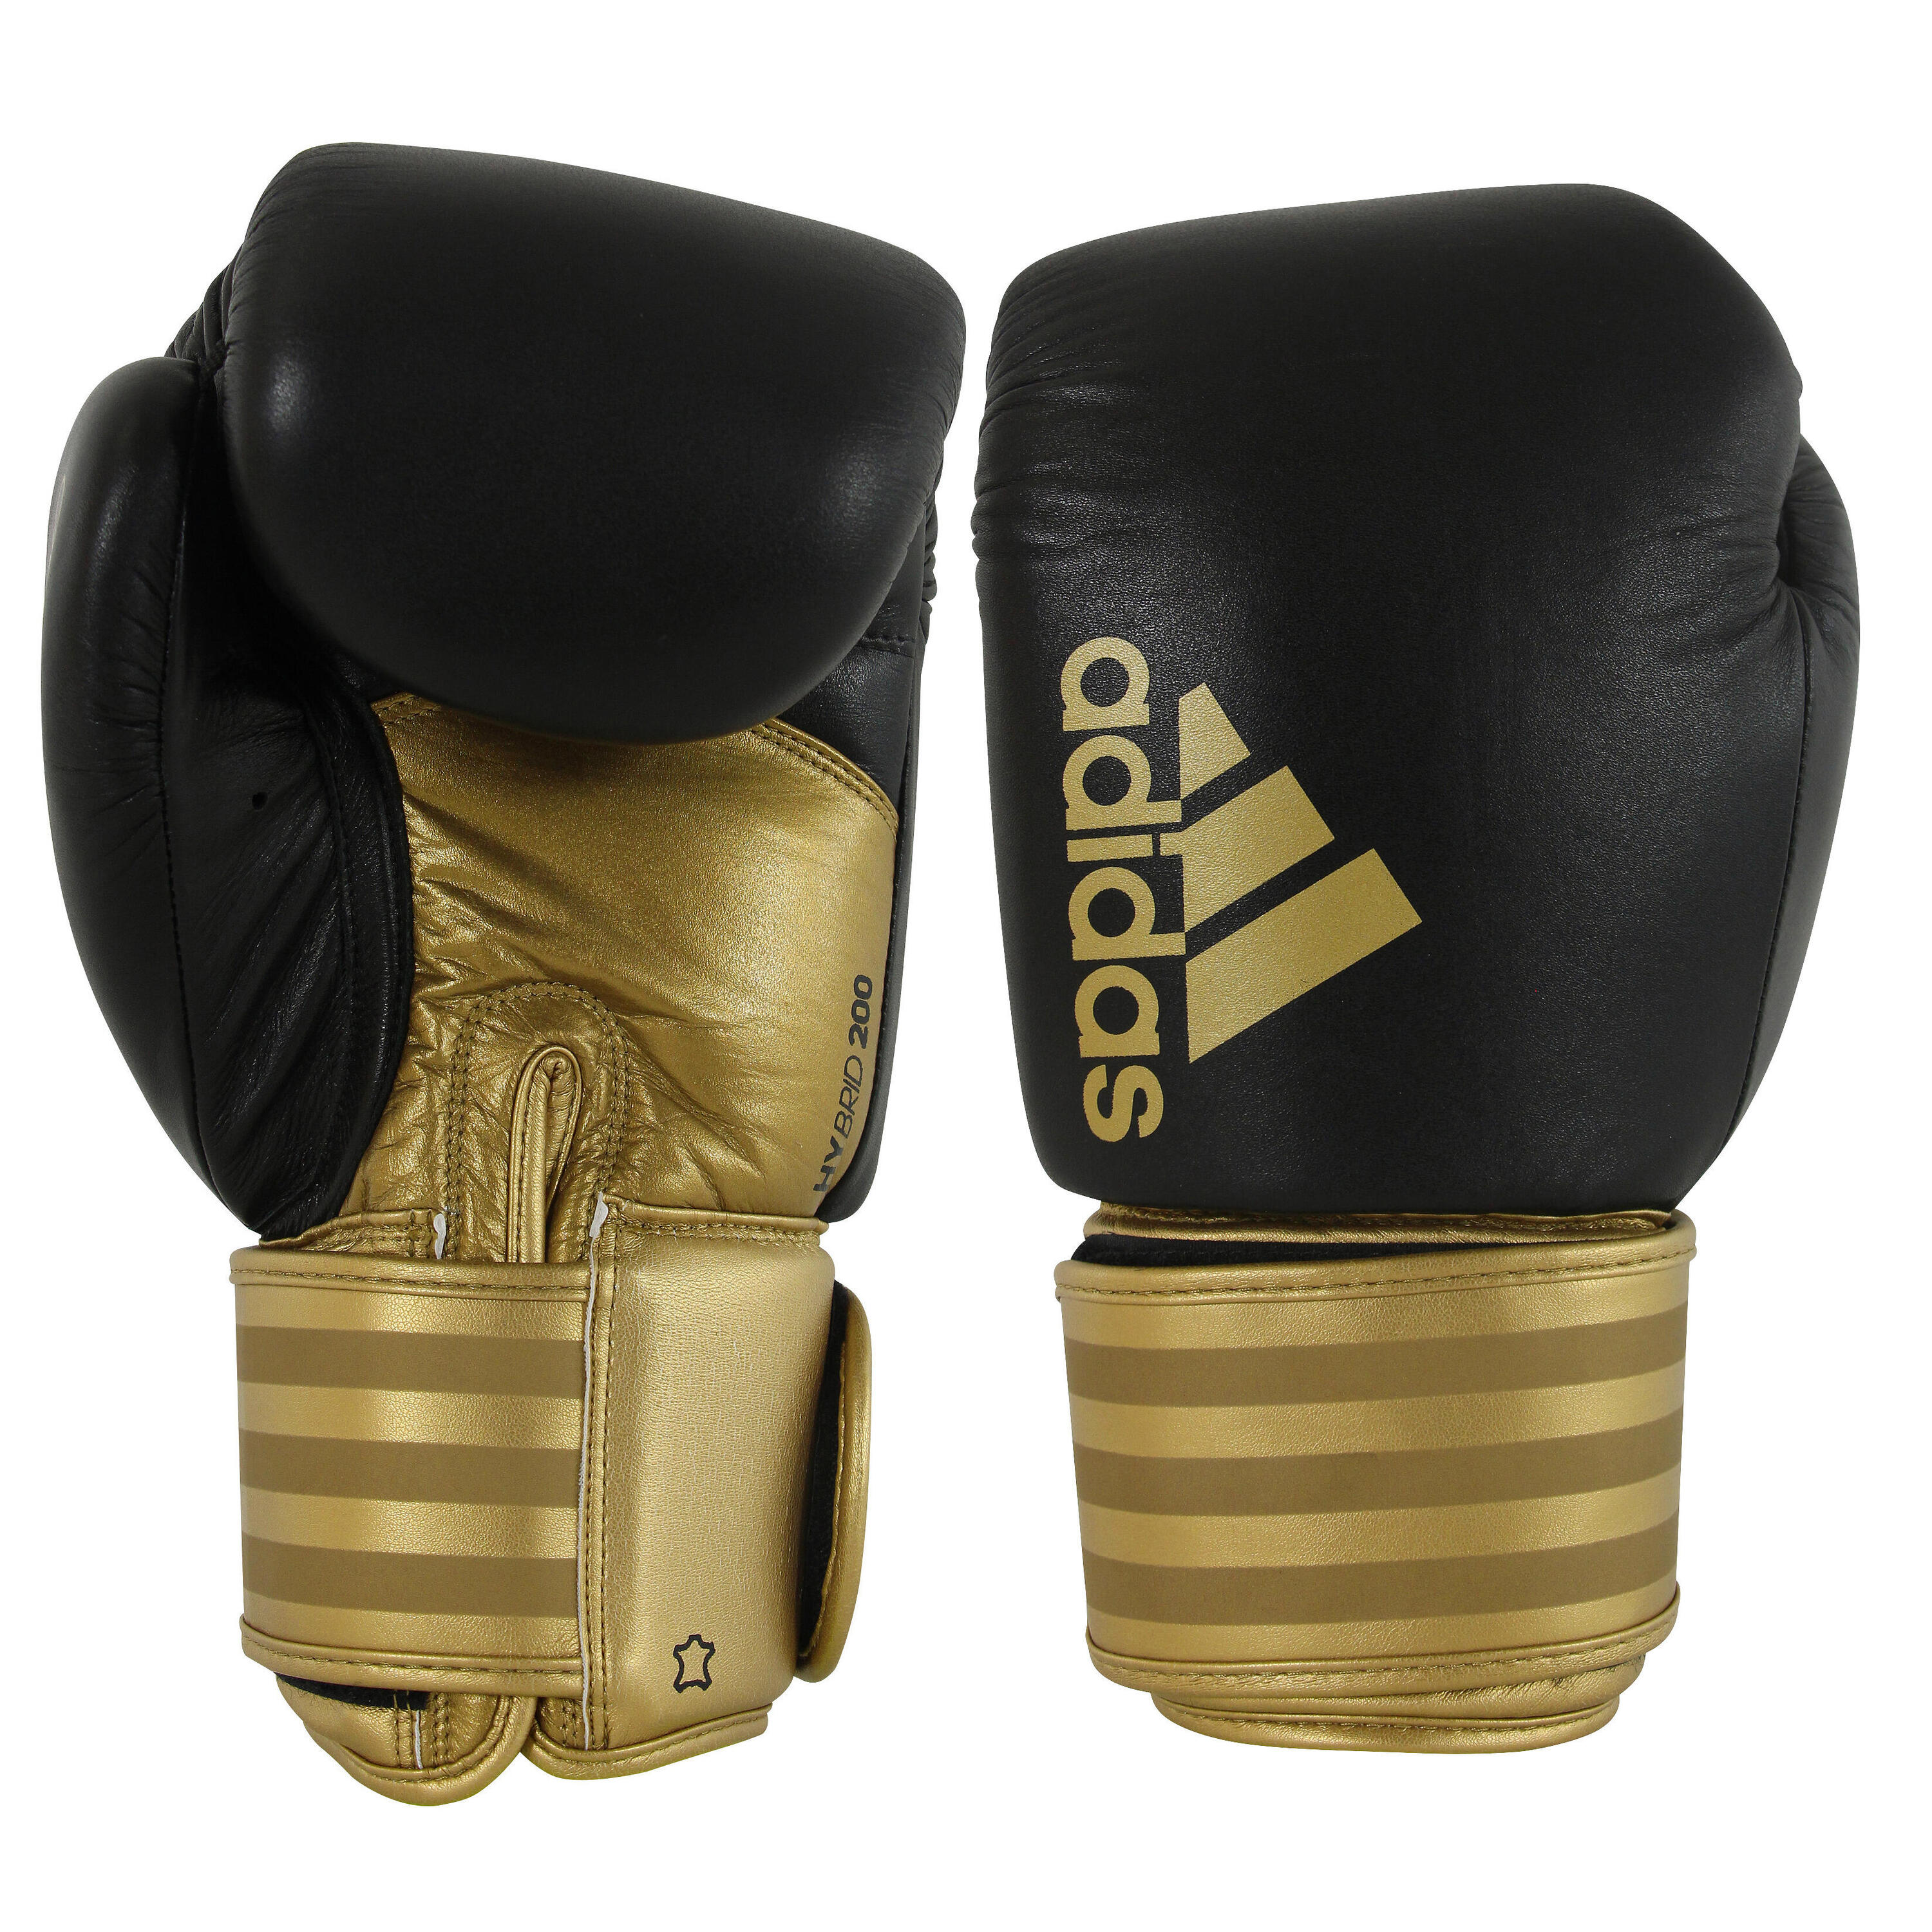 Боксерские перчатки Adidas Hybrid 200, 16 унций. боксерские перчатки twins special bgvla 2 black white 16 унций